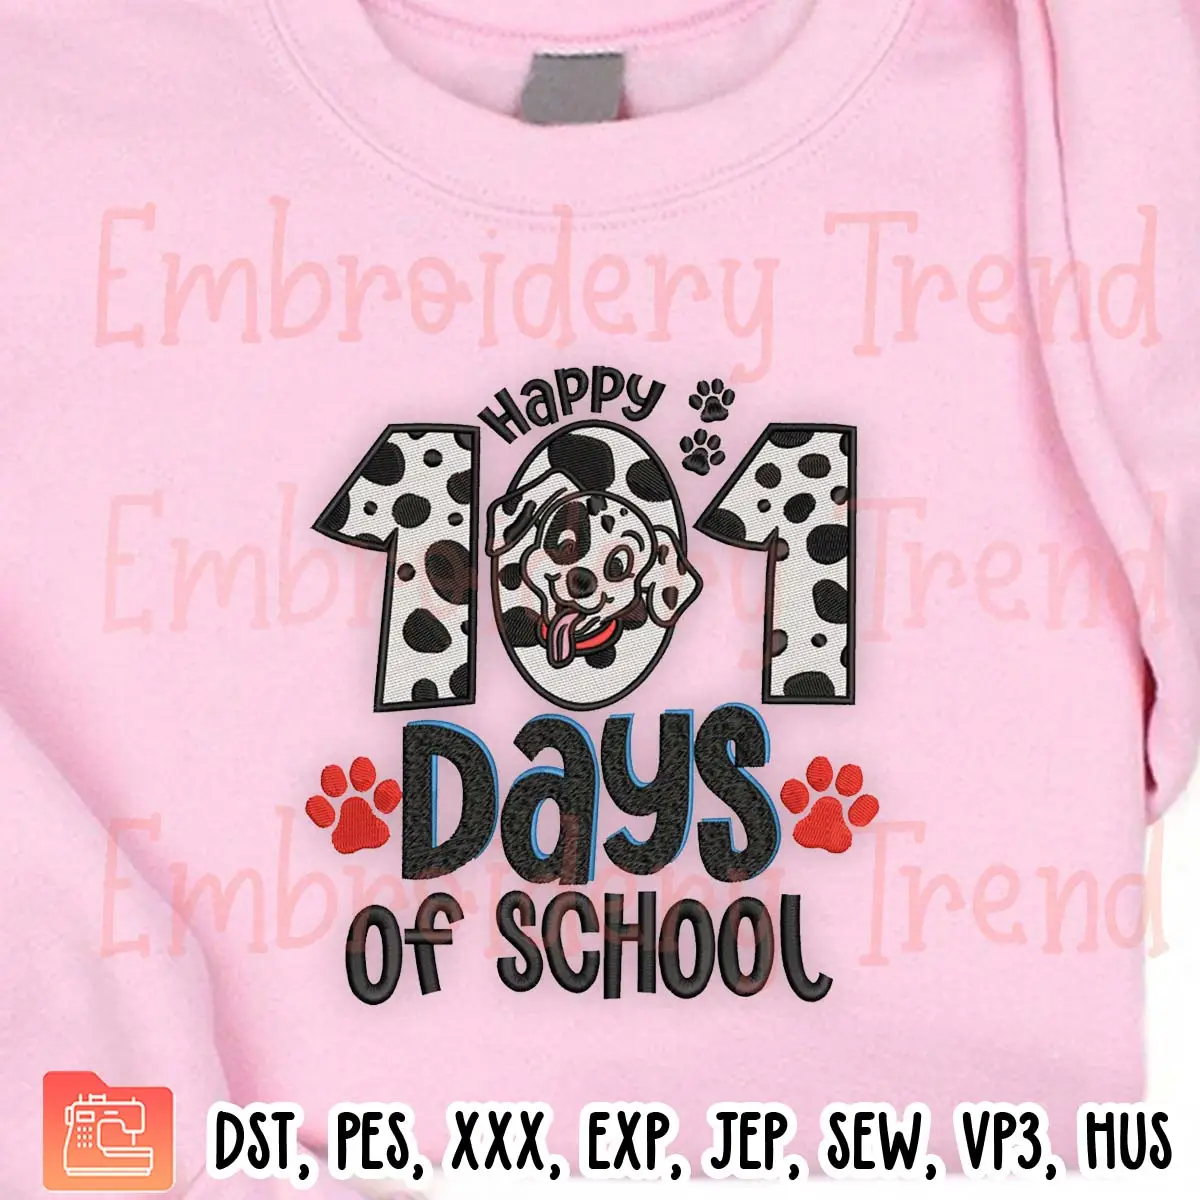 101 Days Of School Dalmatian Dog Embroidery Design, Funny Dalmatian Dog Embroidery Digitizing Pes File